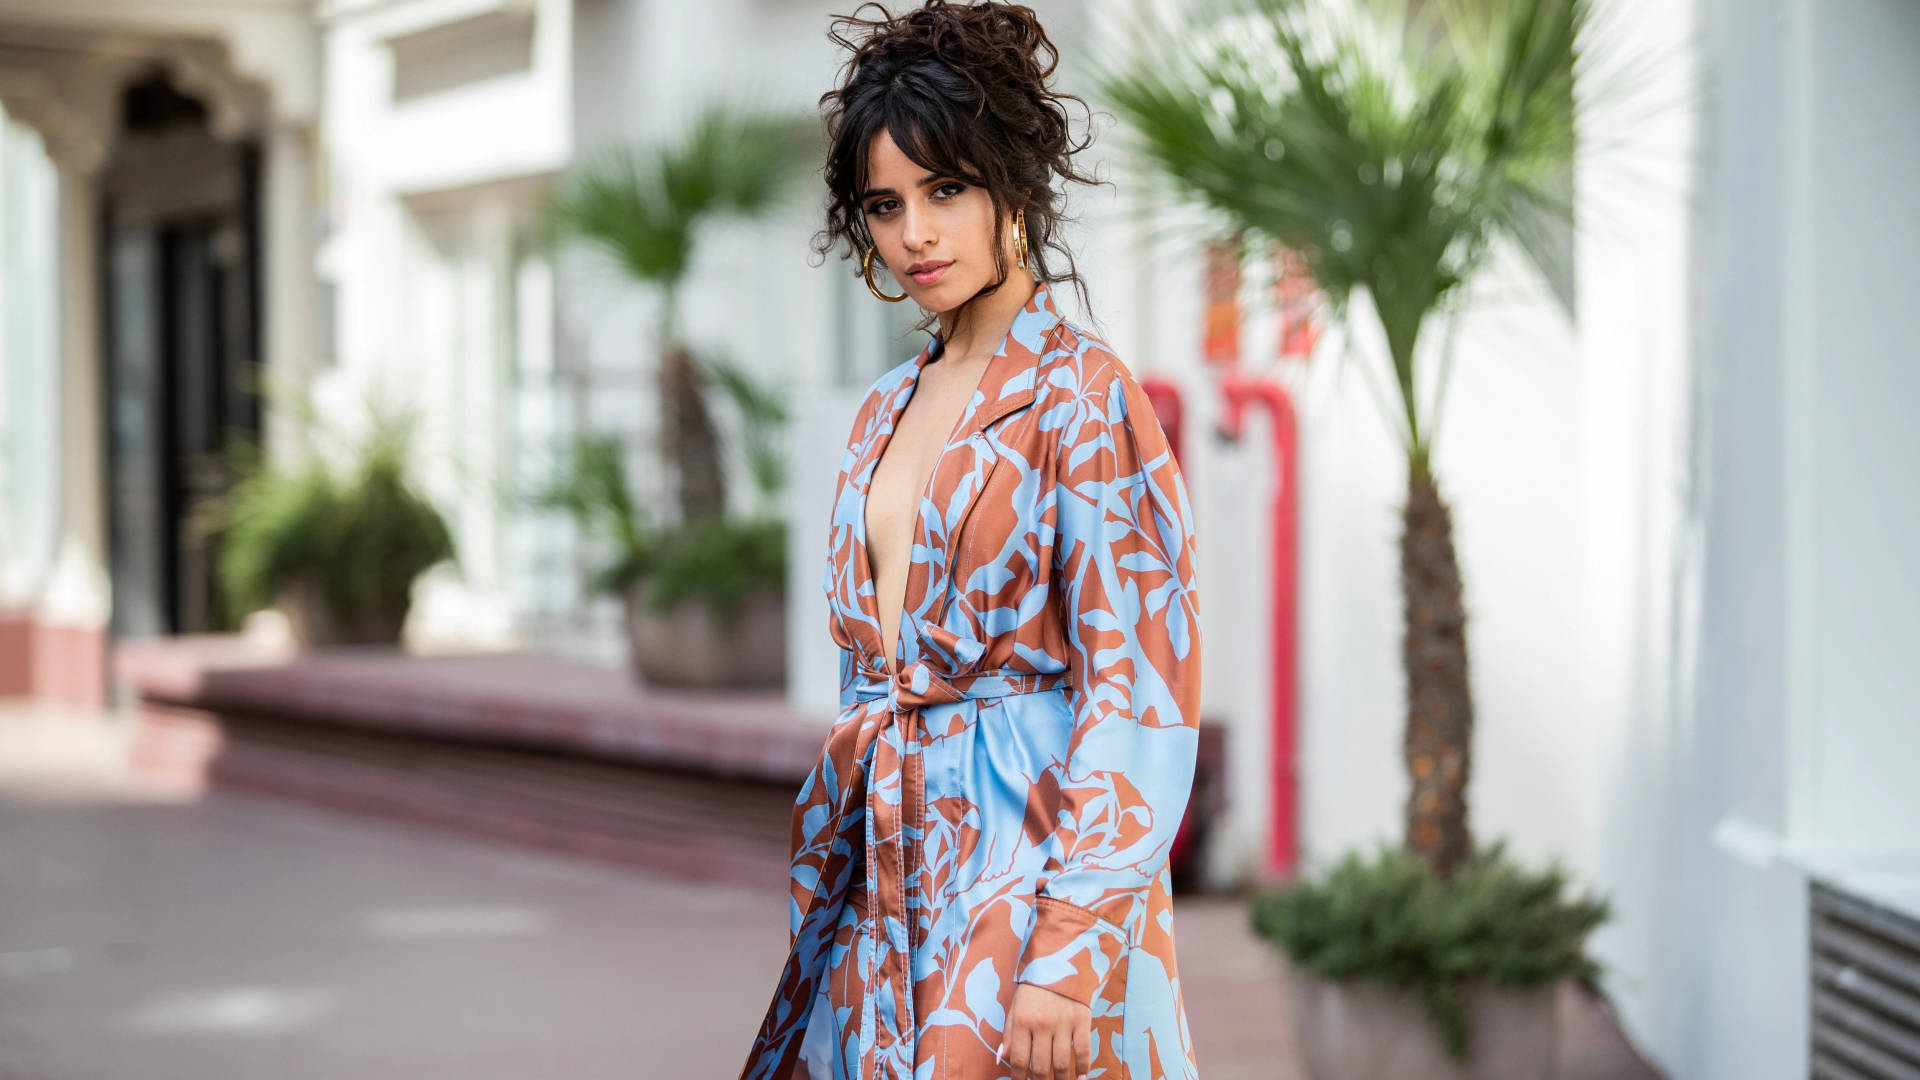 Singer Camila Cabello In Coat Dress Background